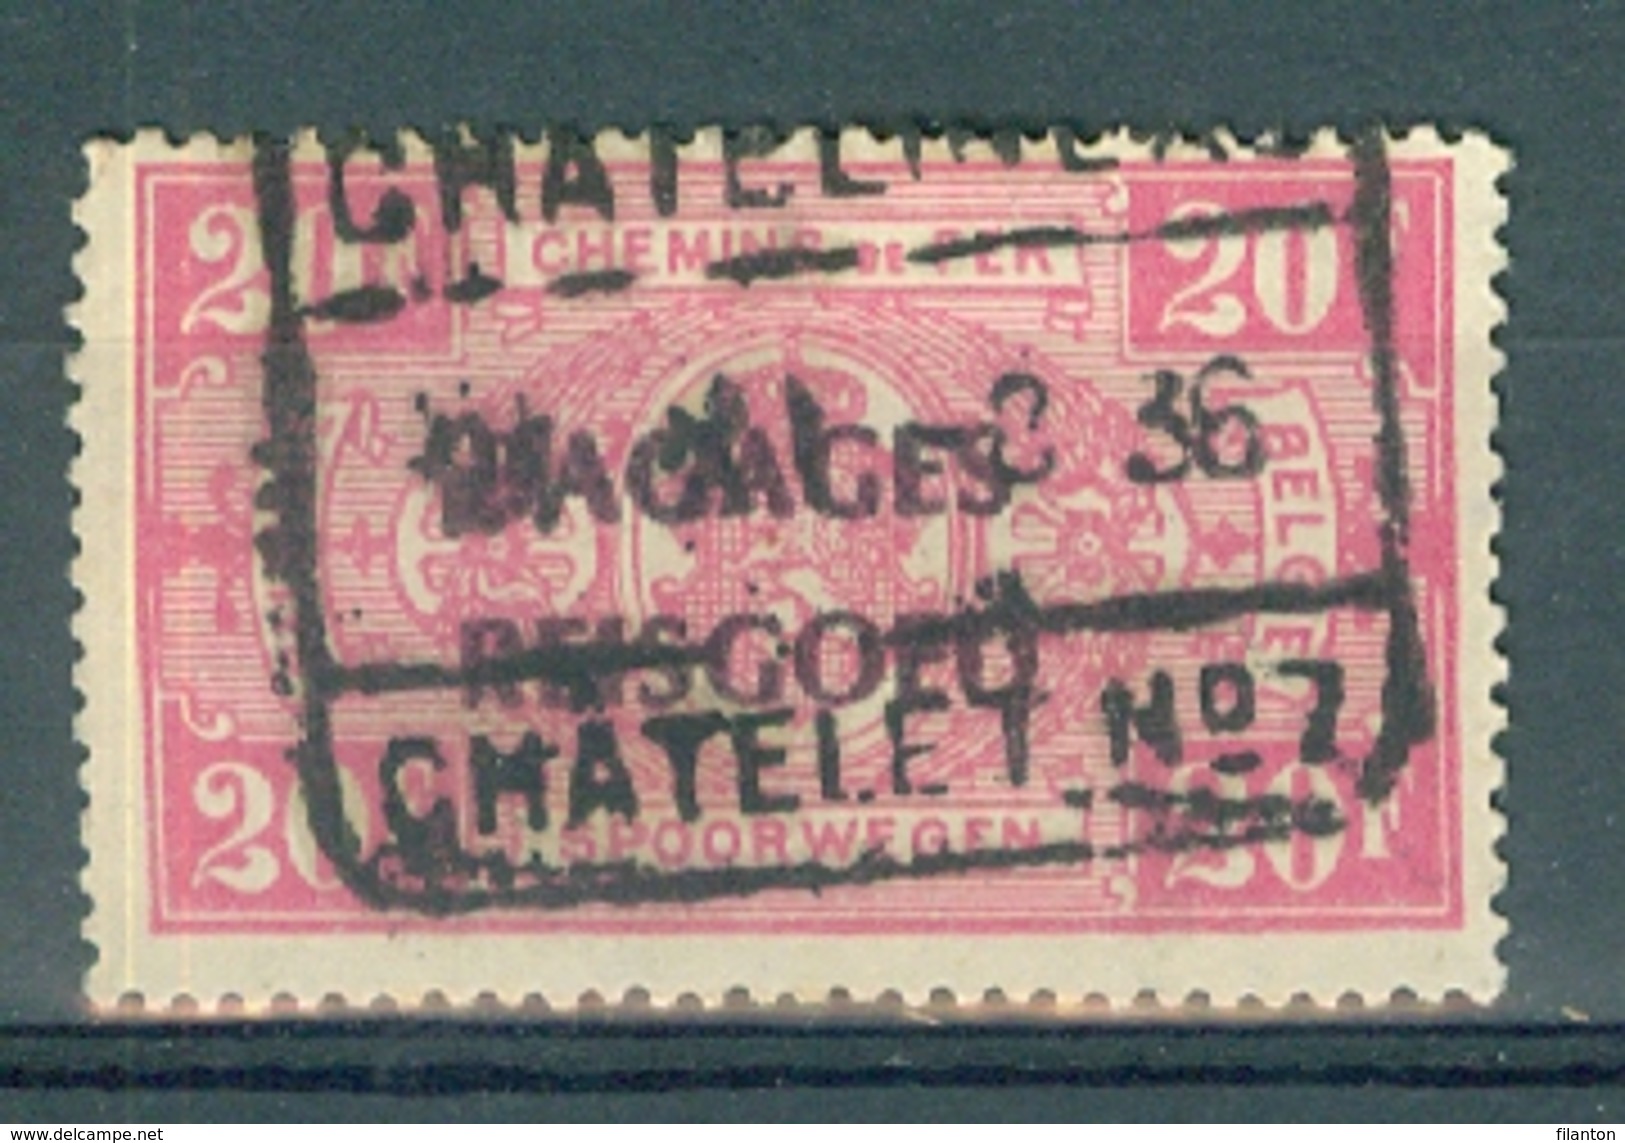 BELGIE - OBP Nr BA 20 - Cachet  "CHATELINEAU-CHATELET Nr 7" - (ref. 12.235) - Cote 22,00 &euro; - Reisgoedzegels [BA]